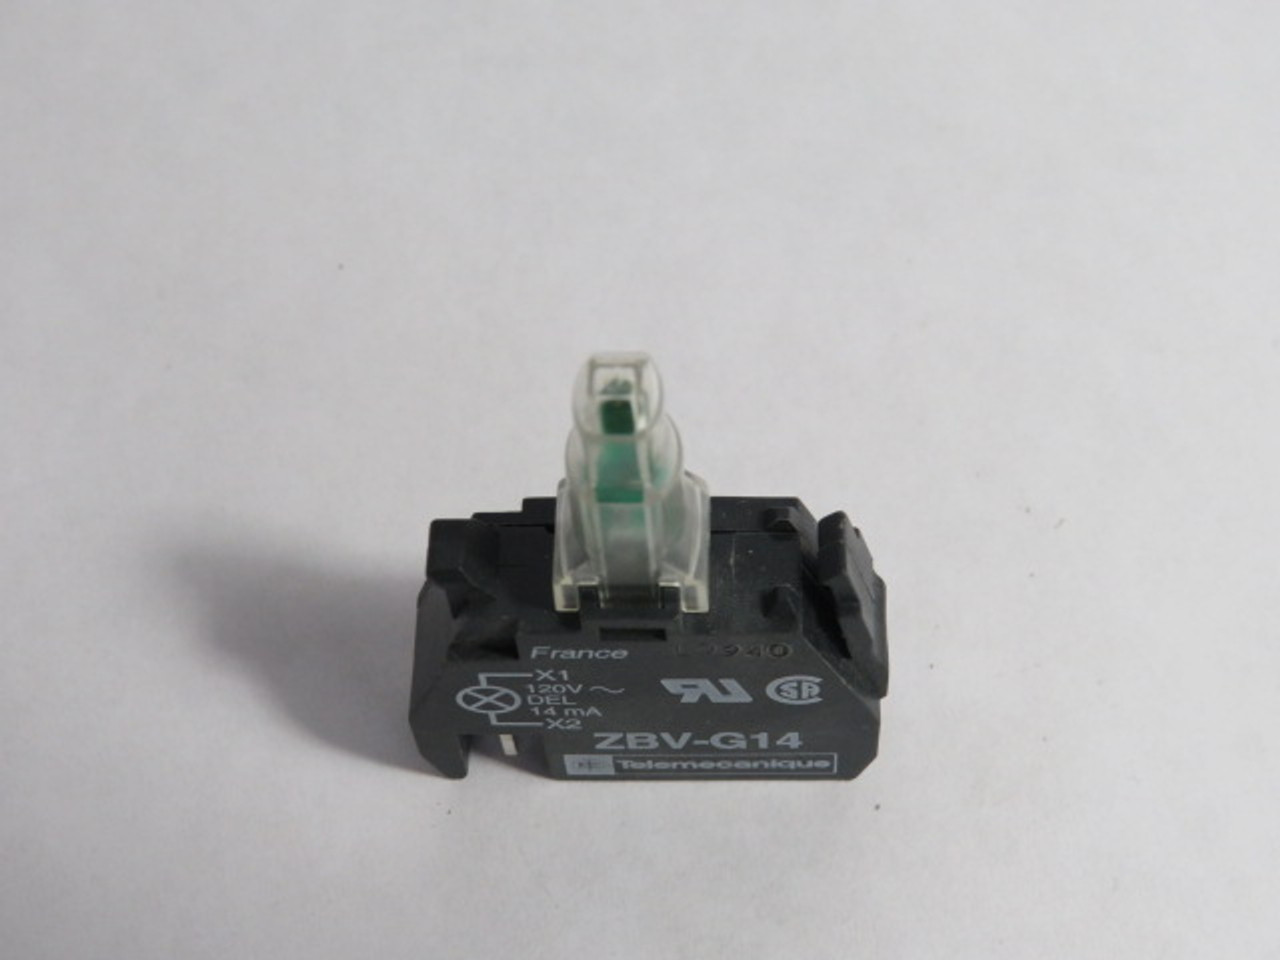 Telemecanique ZBV-G14 Pushbutton Light Module Contact Block 110-120VAC USED